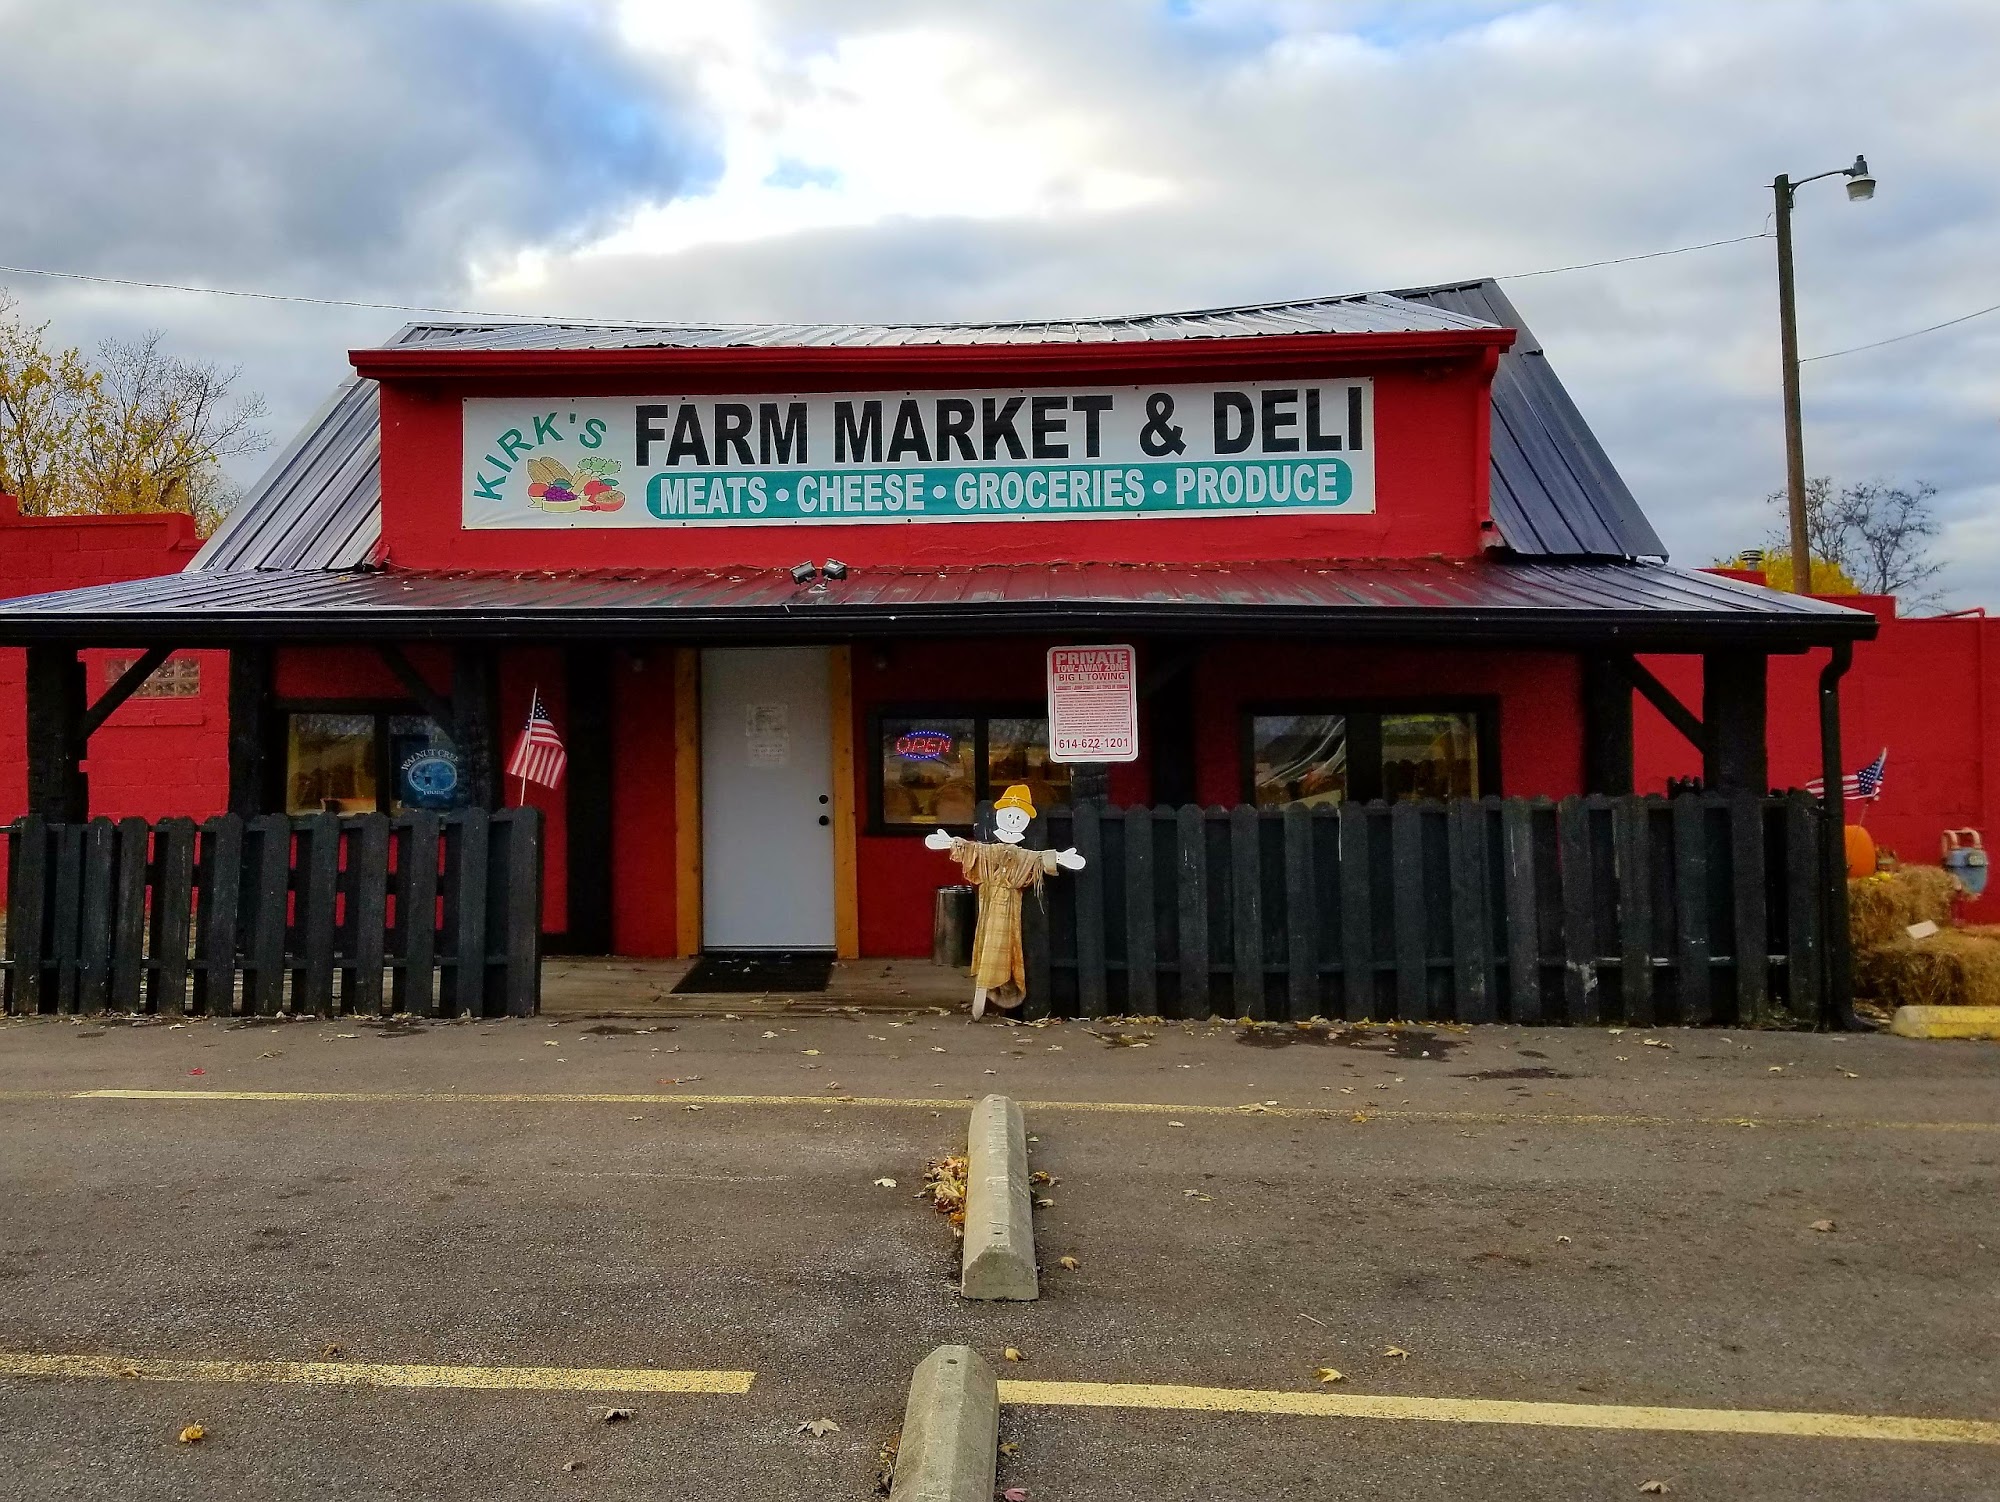 Kirk's Farm Market